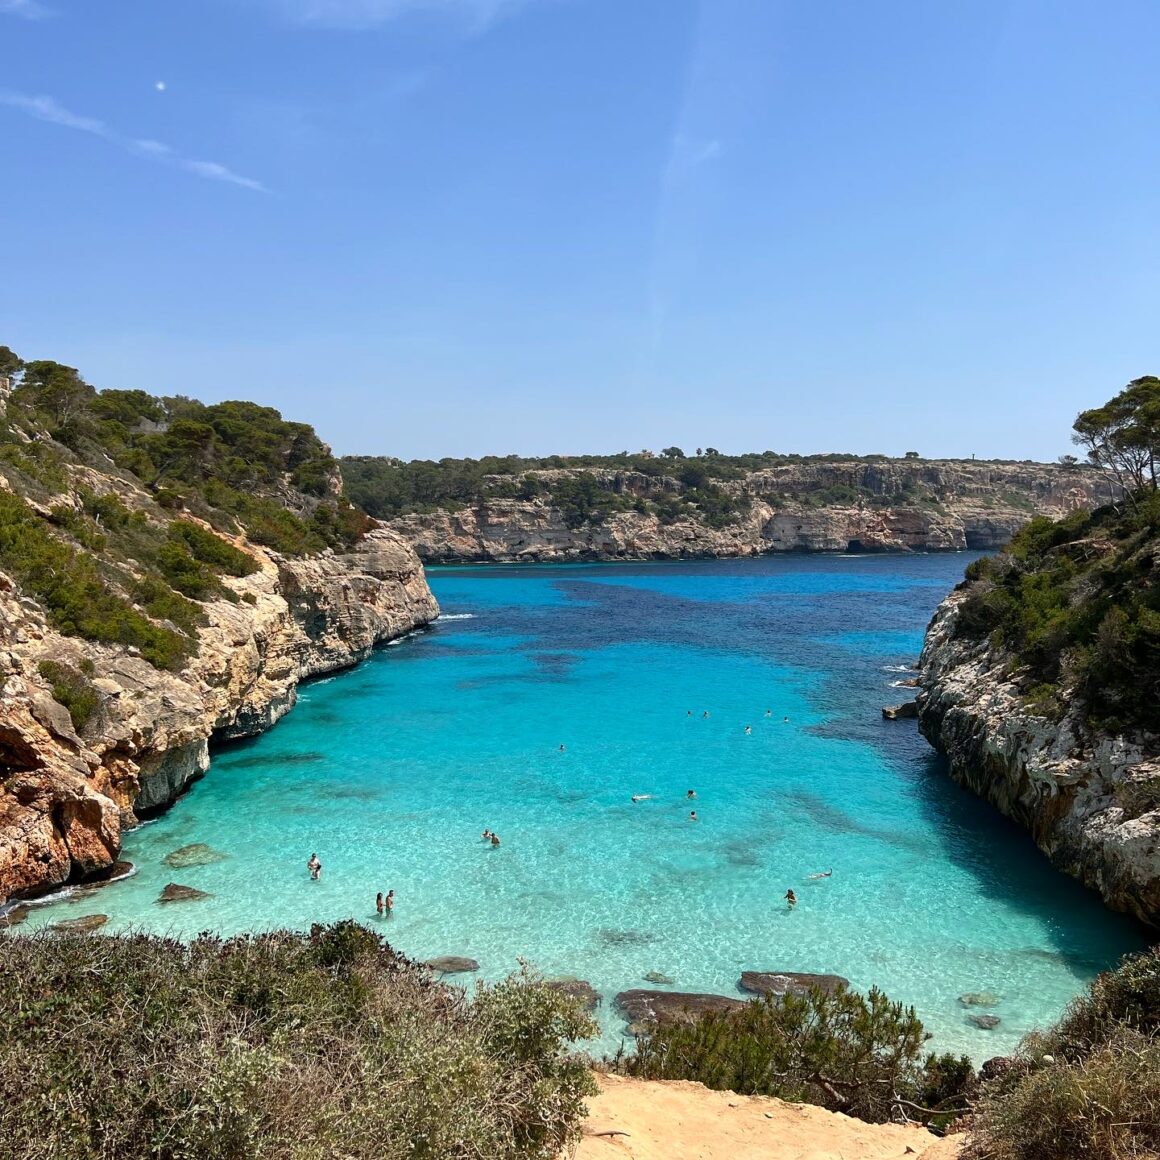 Calo des Moro, one of the most beautiful beaches in Mallorca.